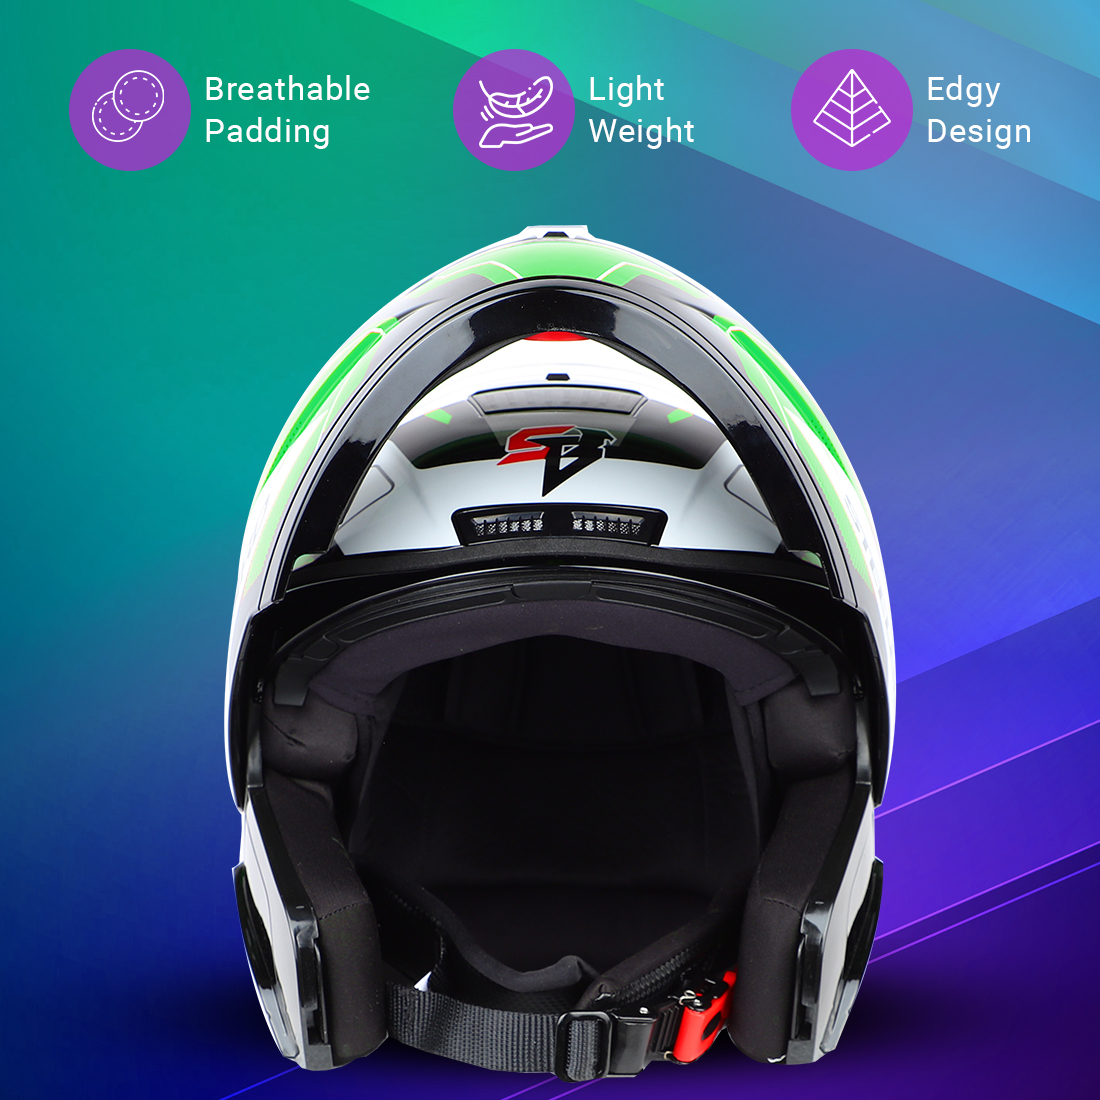 Steelbird SBA-7 Huracan ISI Certified Flip-Up Helmet For Men And Women (Glossy Black Green With Clear Visor)